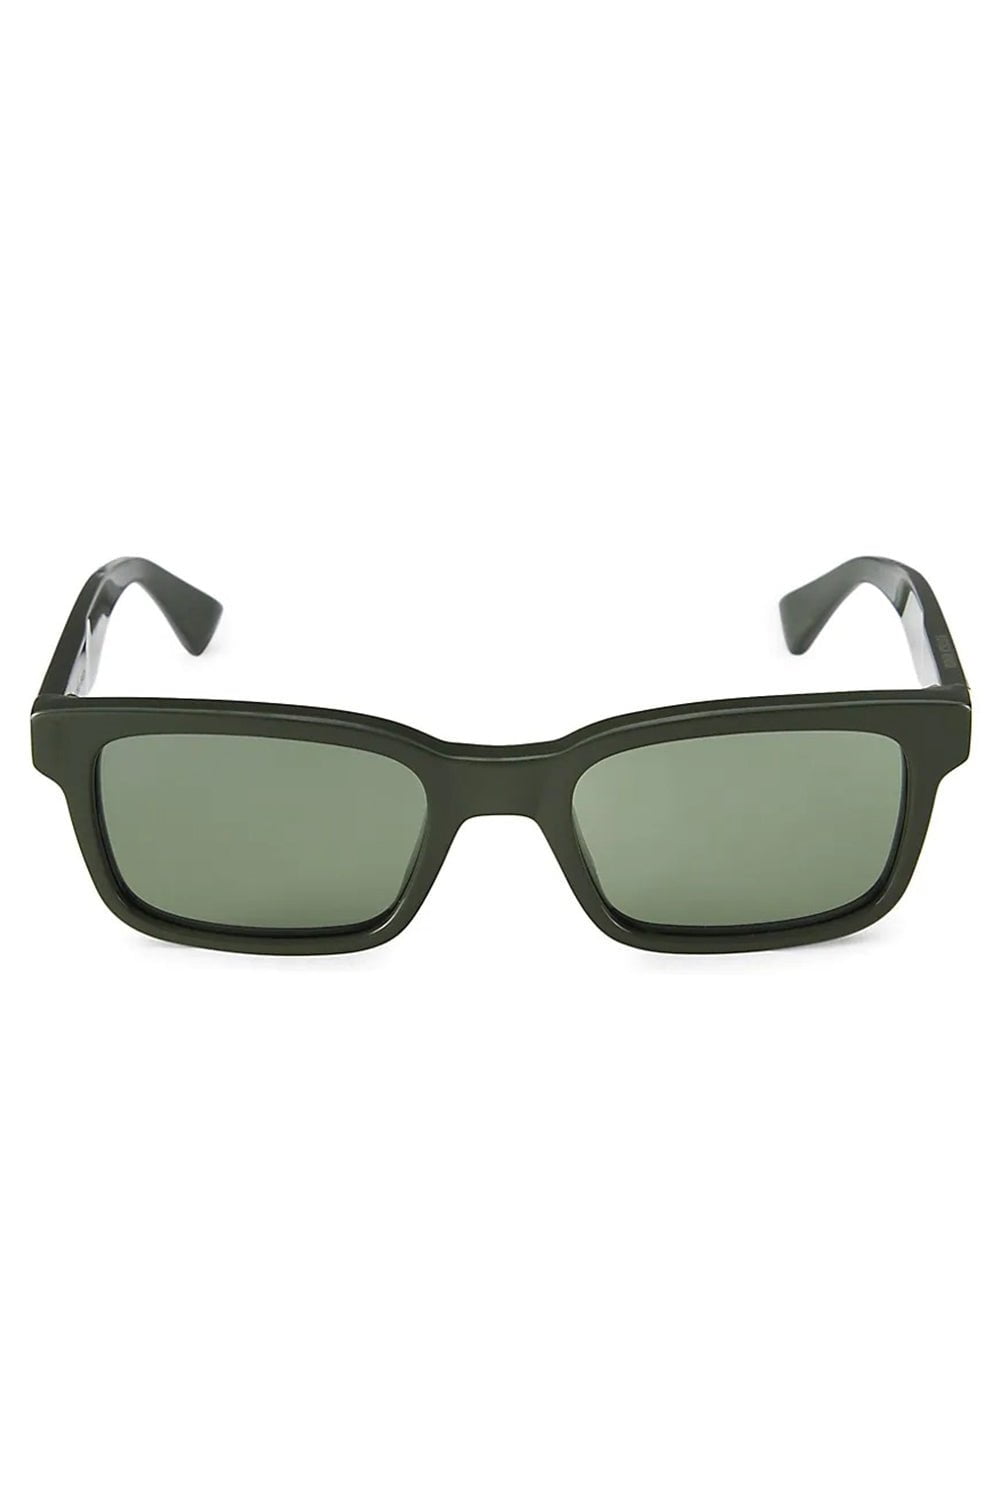 BOTTEGA VENETA-Rectangle Classic Sunglasses-GREEN